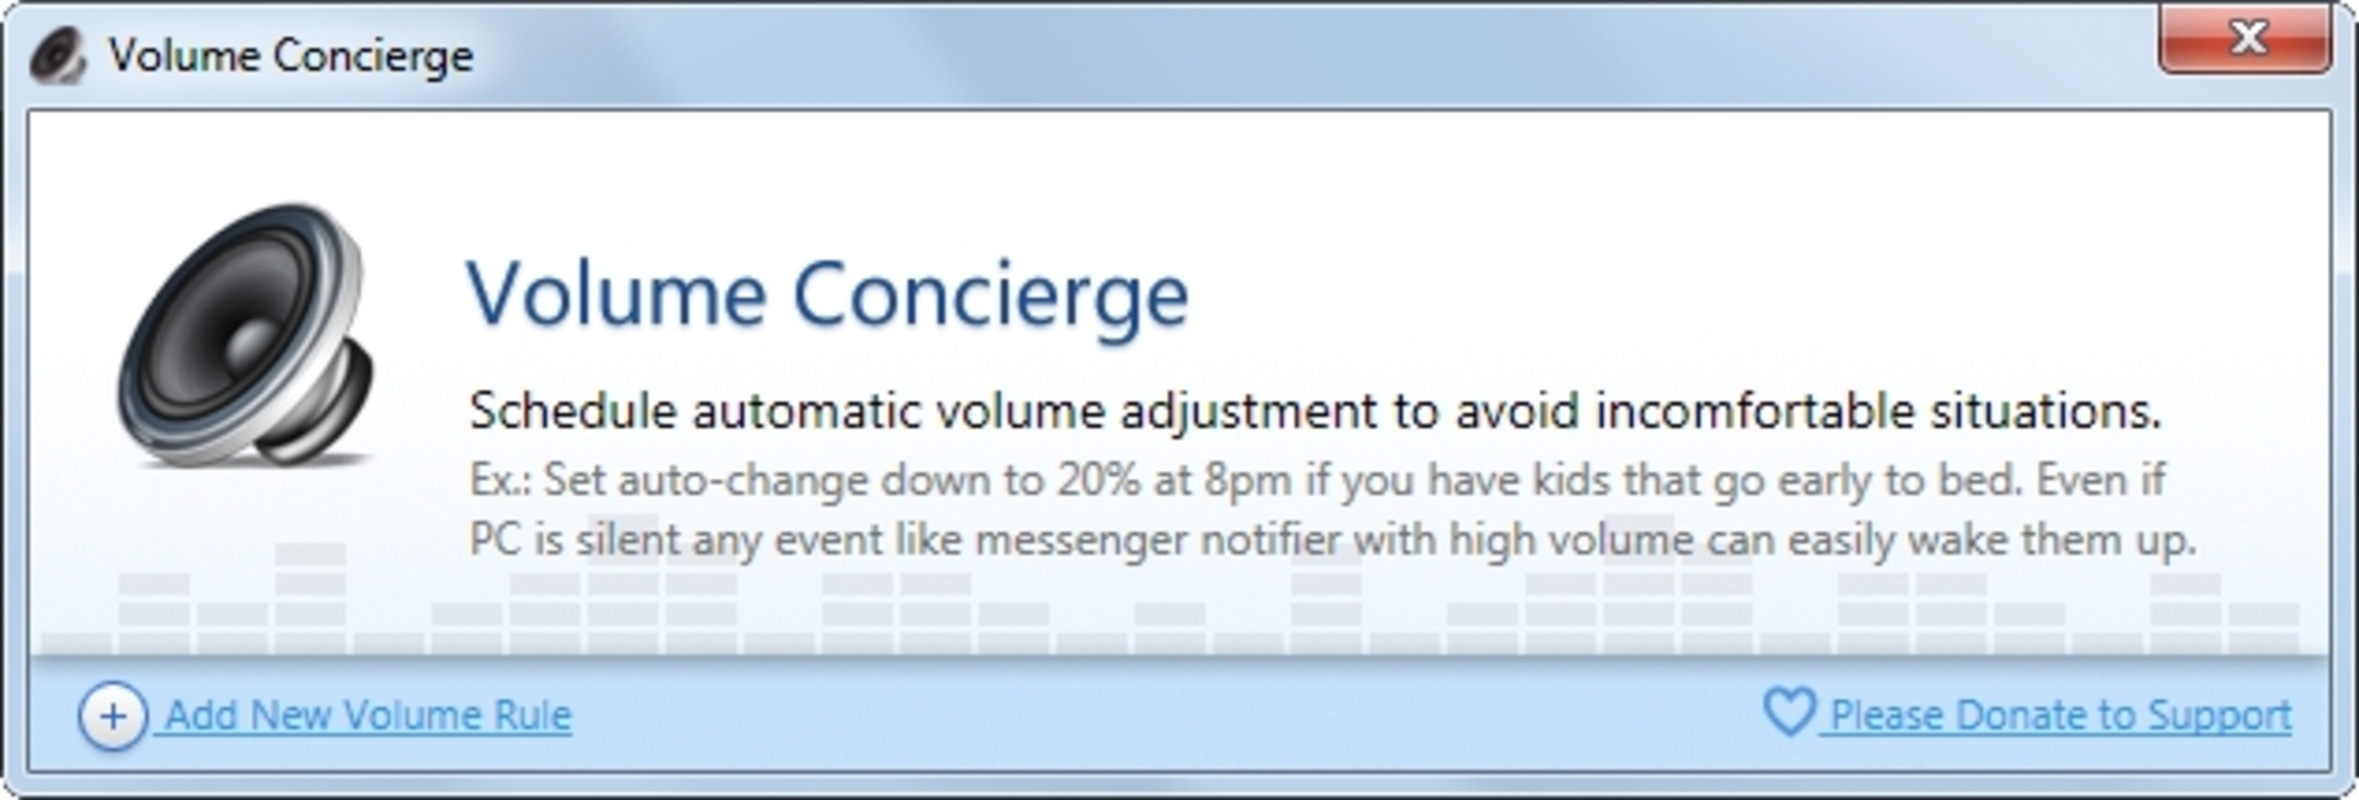 Volume Concierge 1.2.2 feature